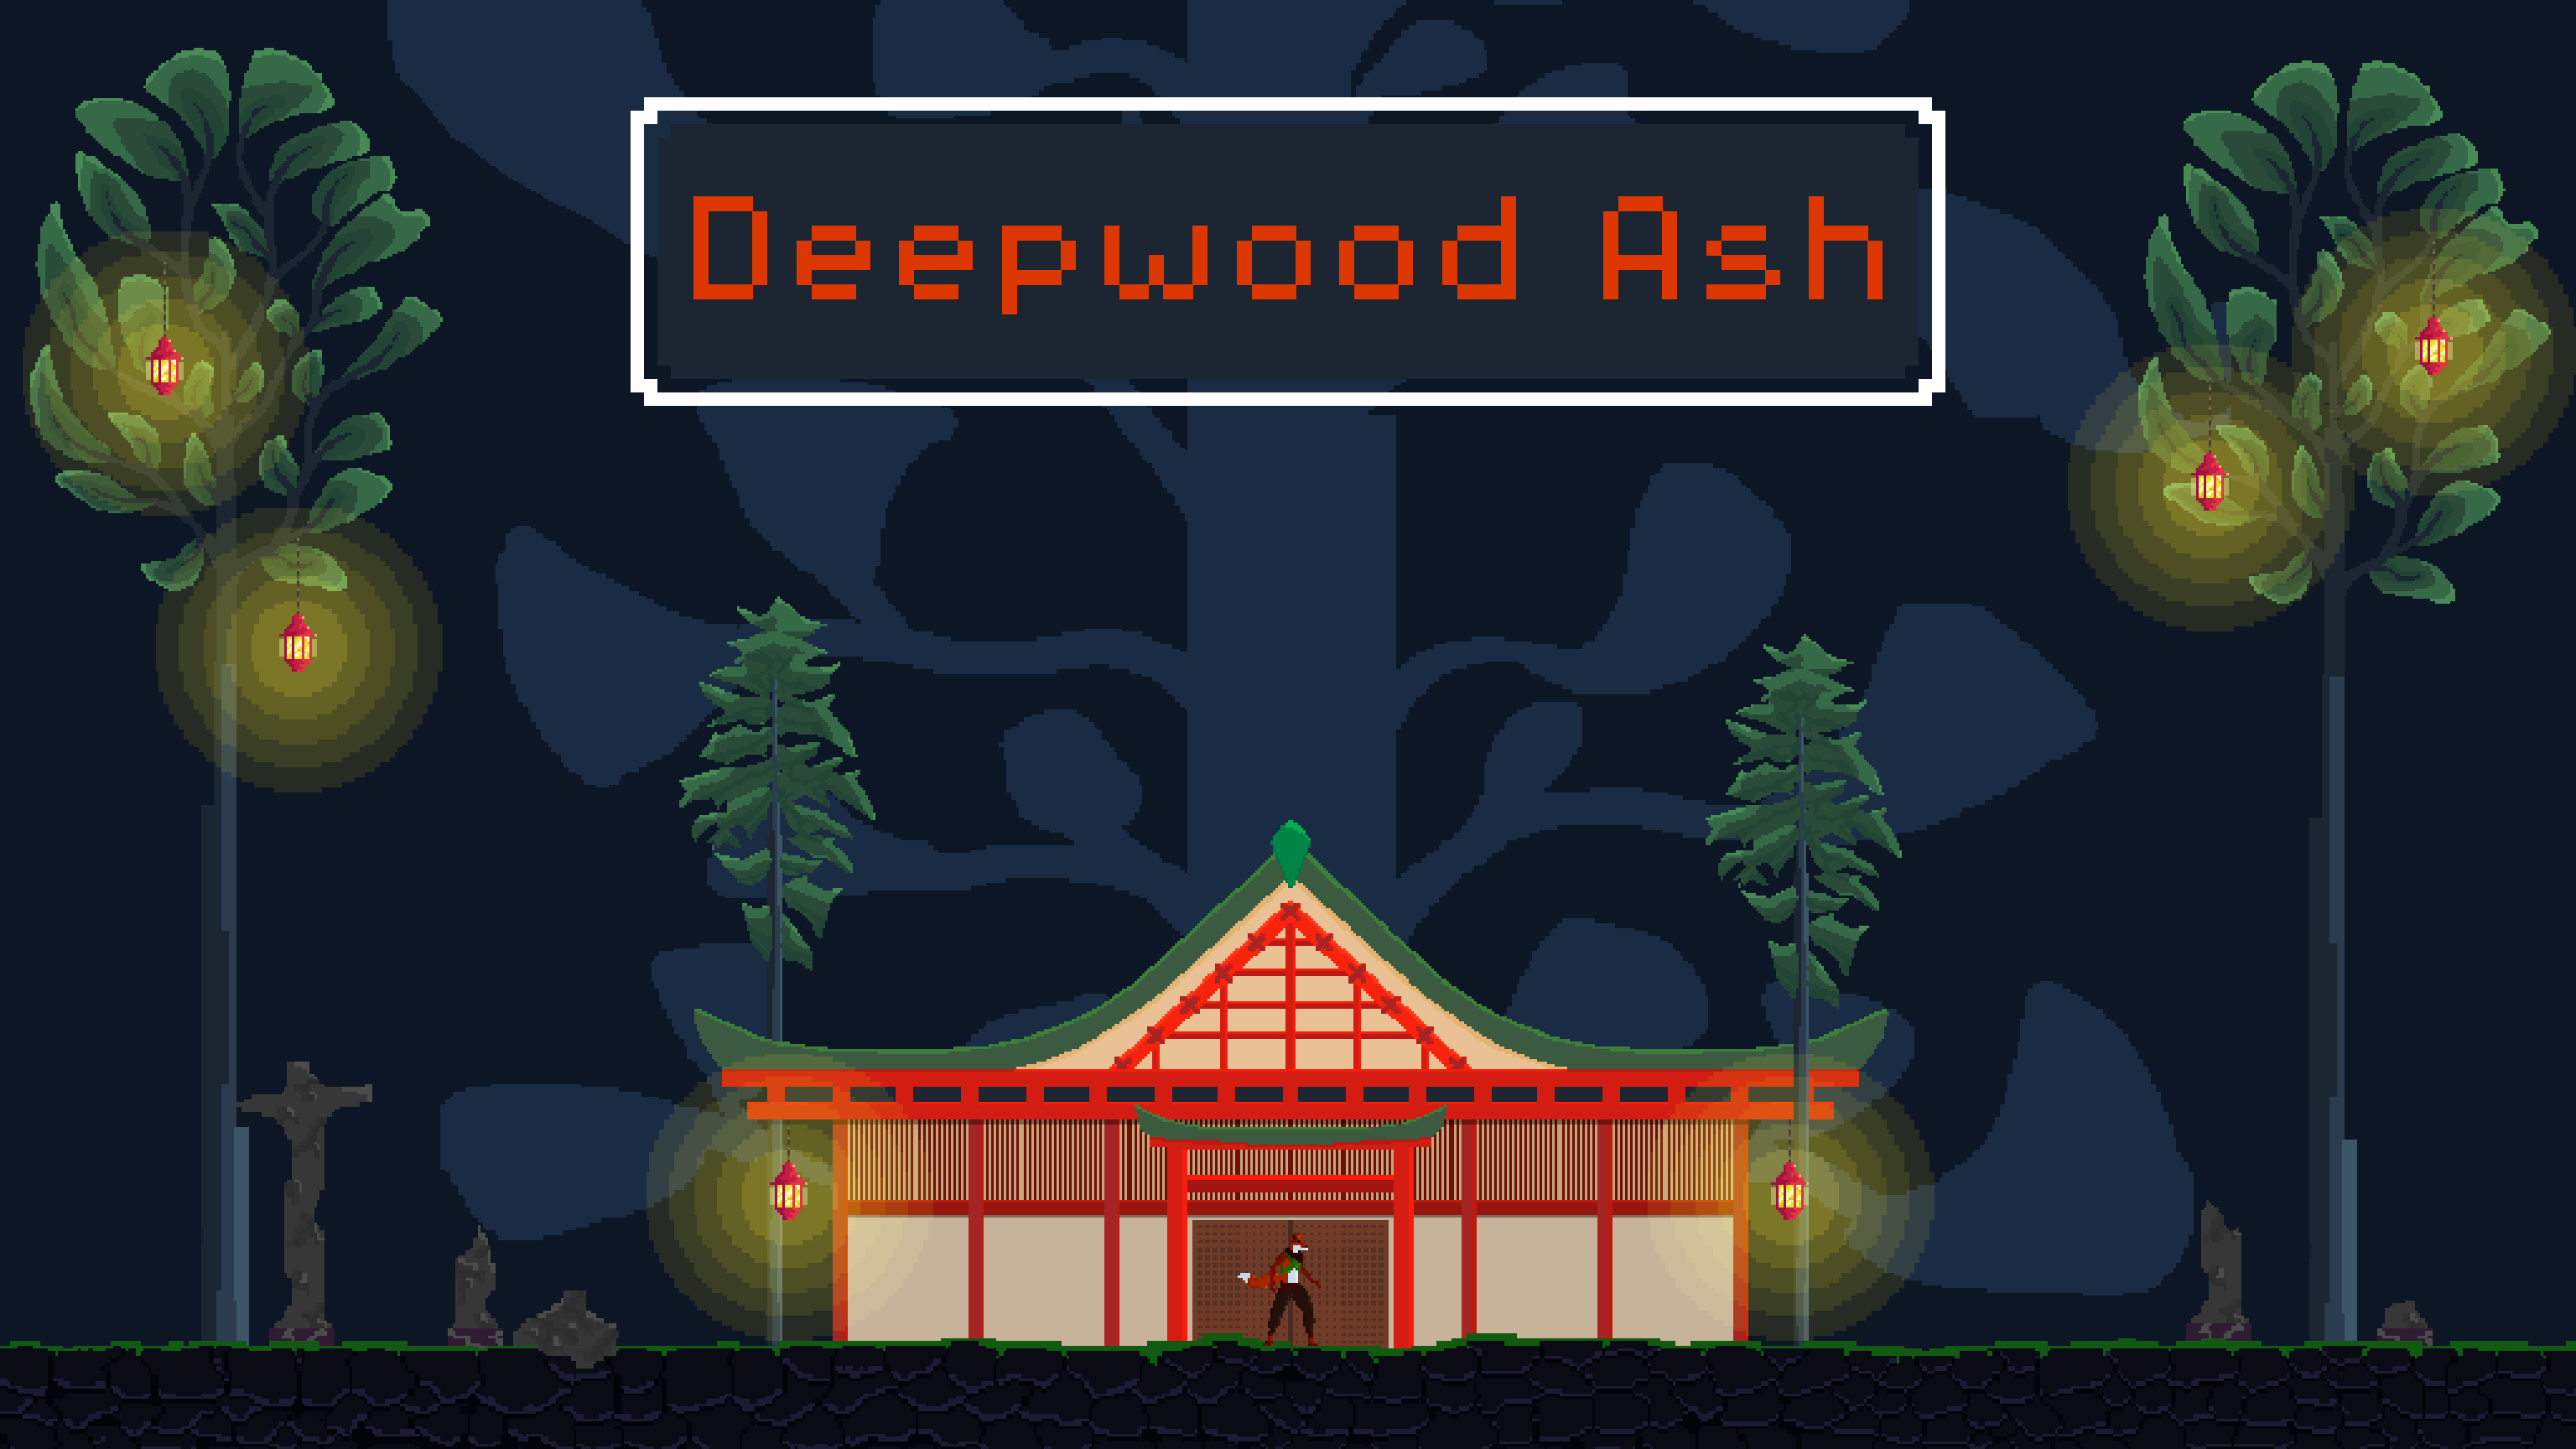 Deepwood Ash